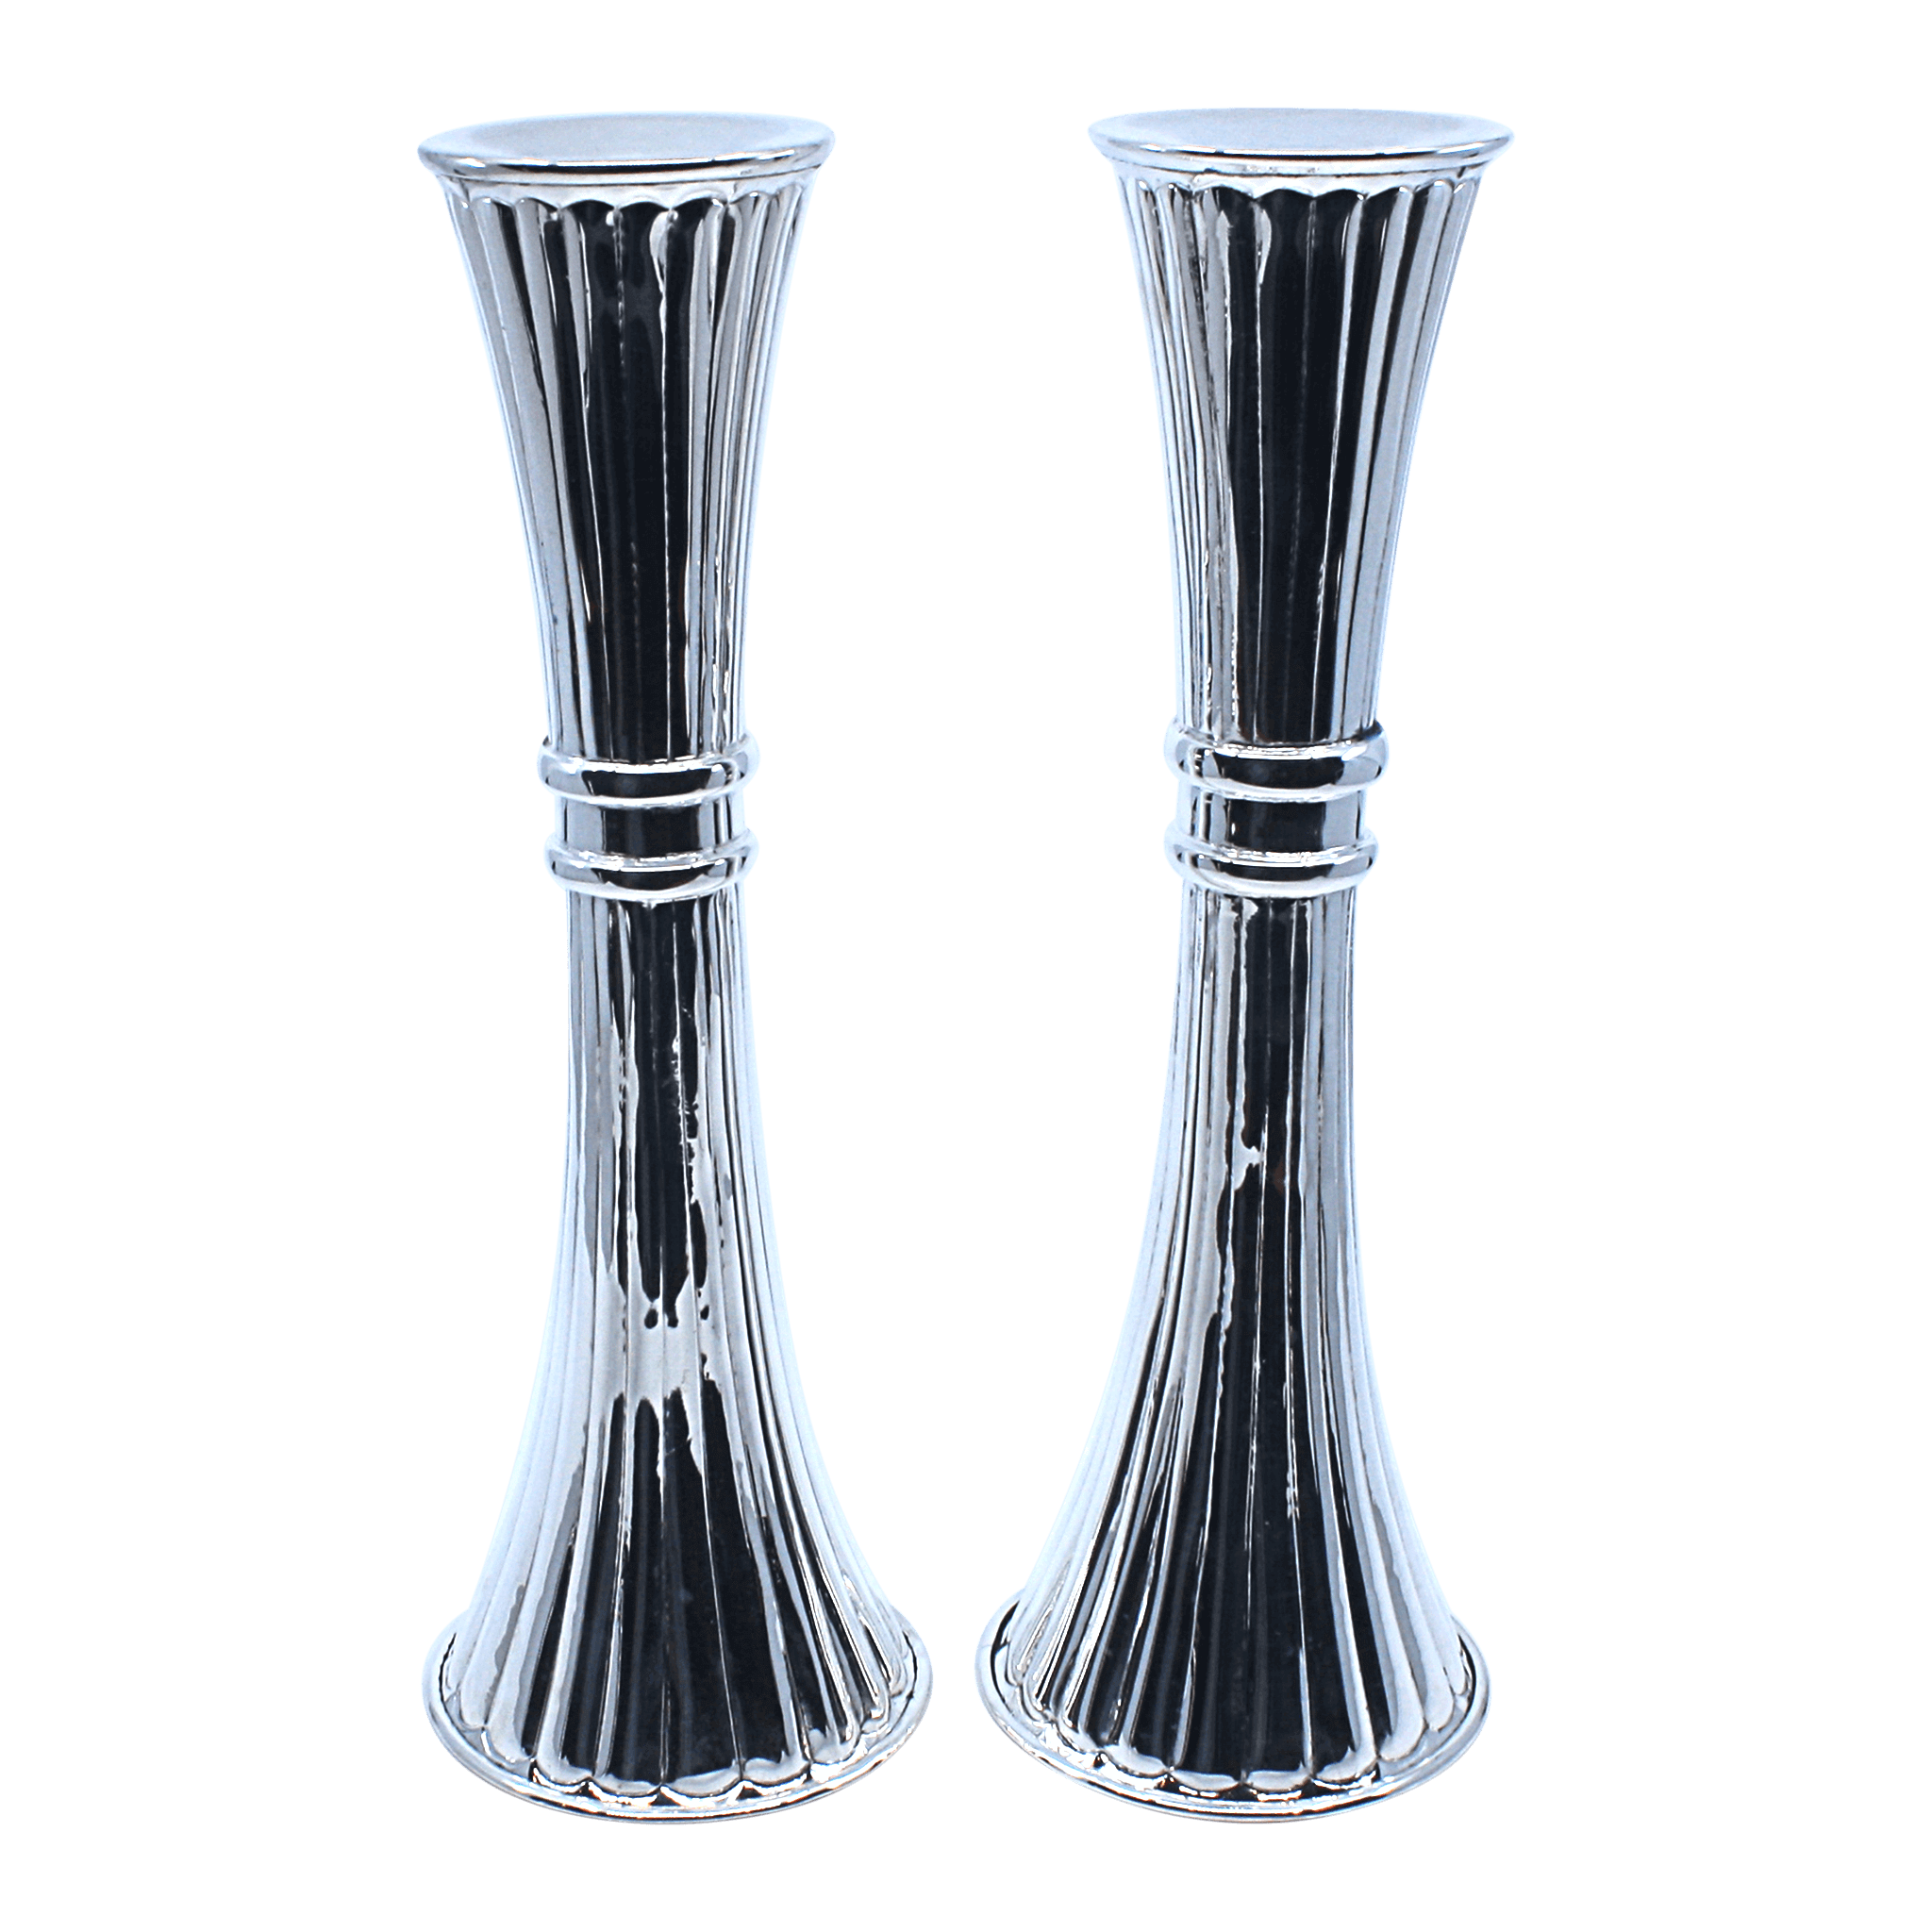 Striped Hourglass Shabbat Candlesticks A - Piece By Zion Hadad